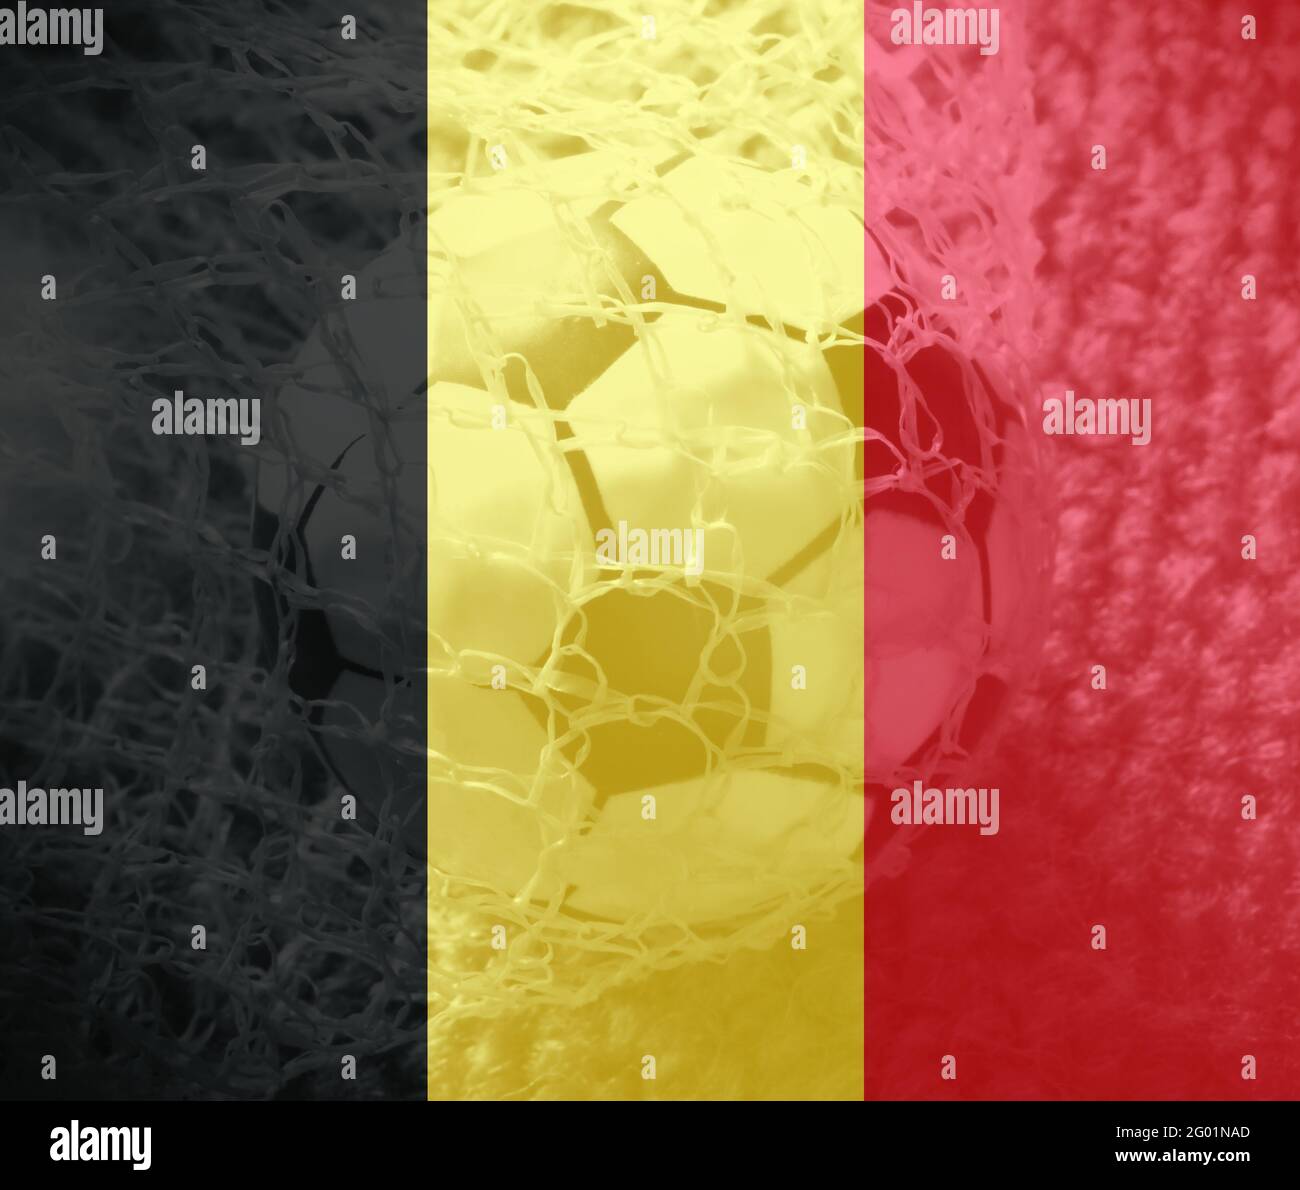 Belgium flag with a soccer ball going inside the net. Concept of Belgium soccer team. Stock Photo